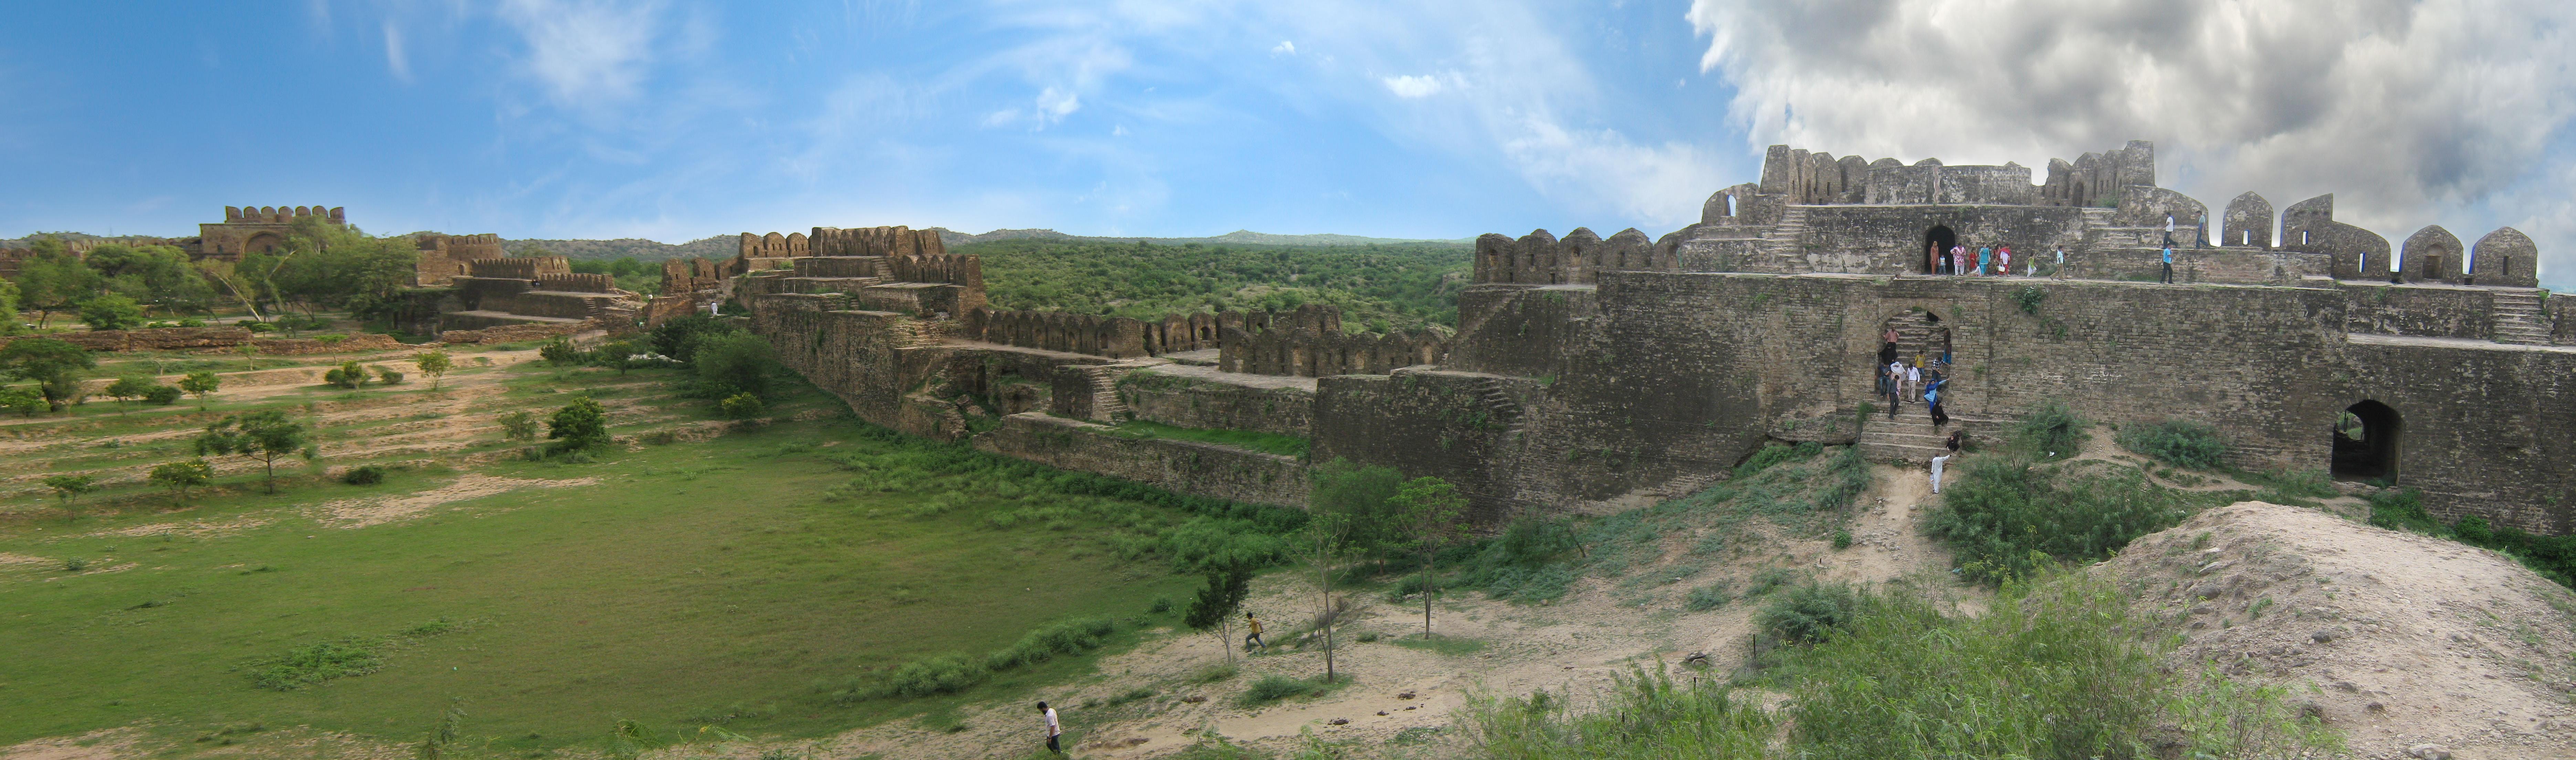 Panoramic view of the Rohtas Fort, Jhelum, Pakistan, Landolia, a ...